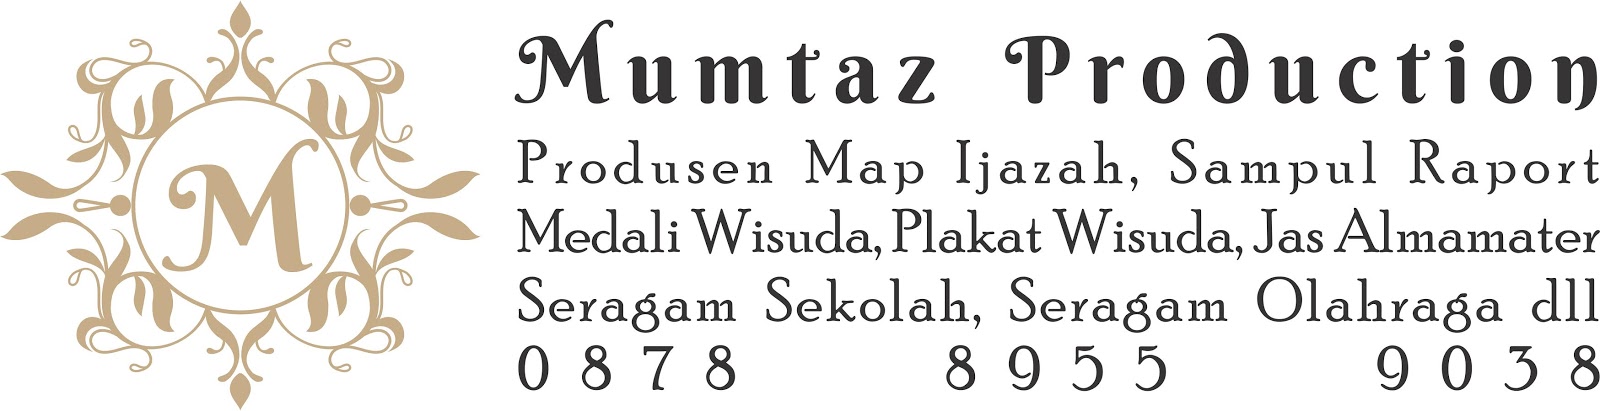 Produsen Map Ijazah